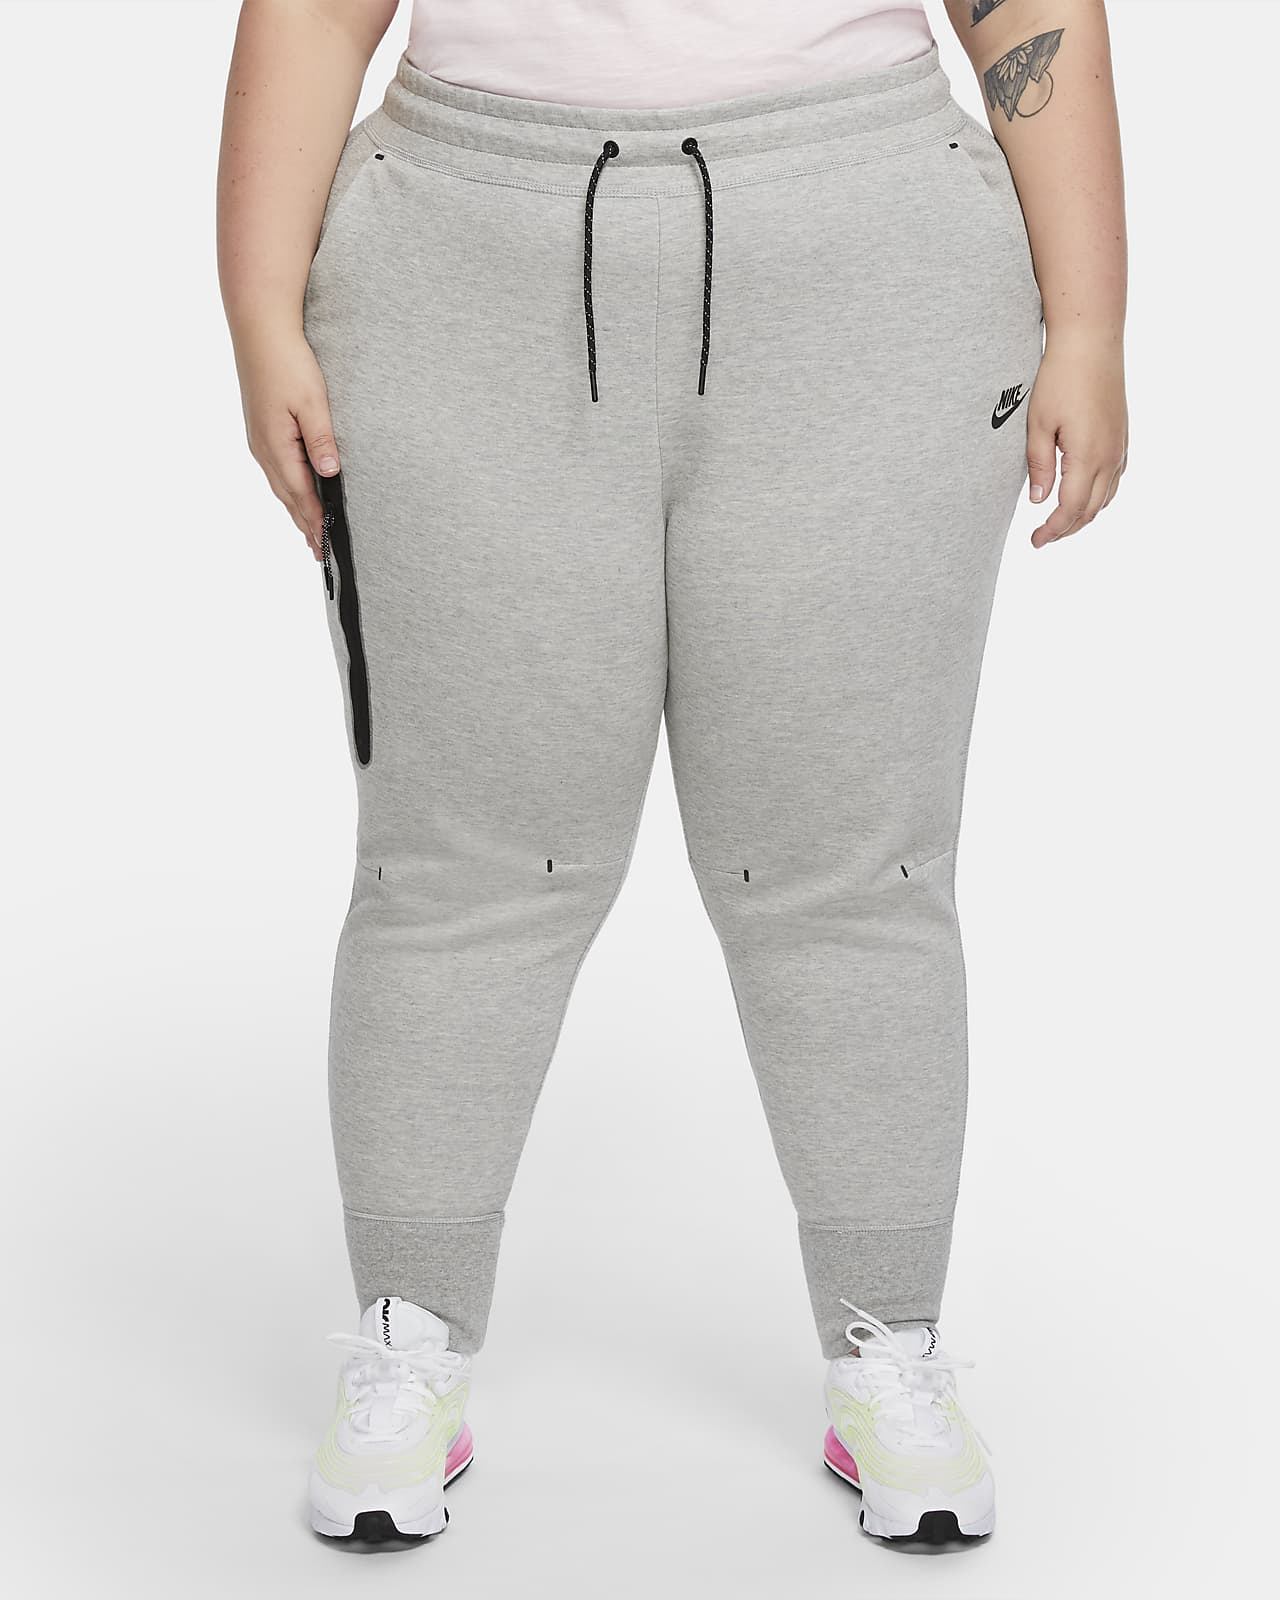 Nike Fleece Trousers (Plus Size). Nike LU